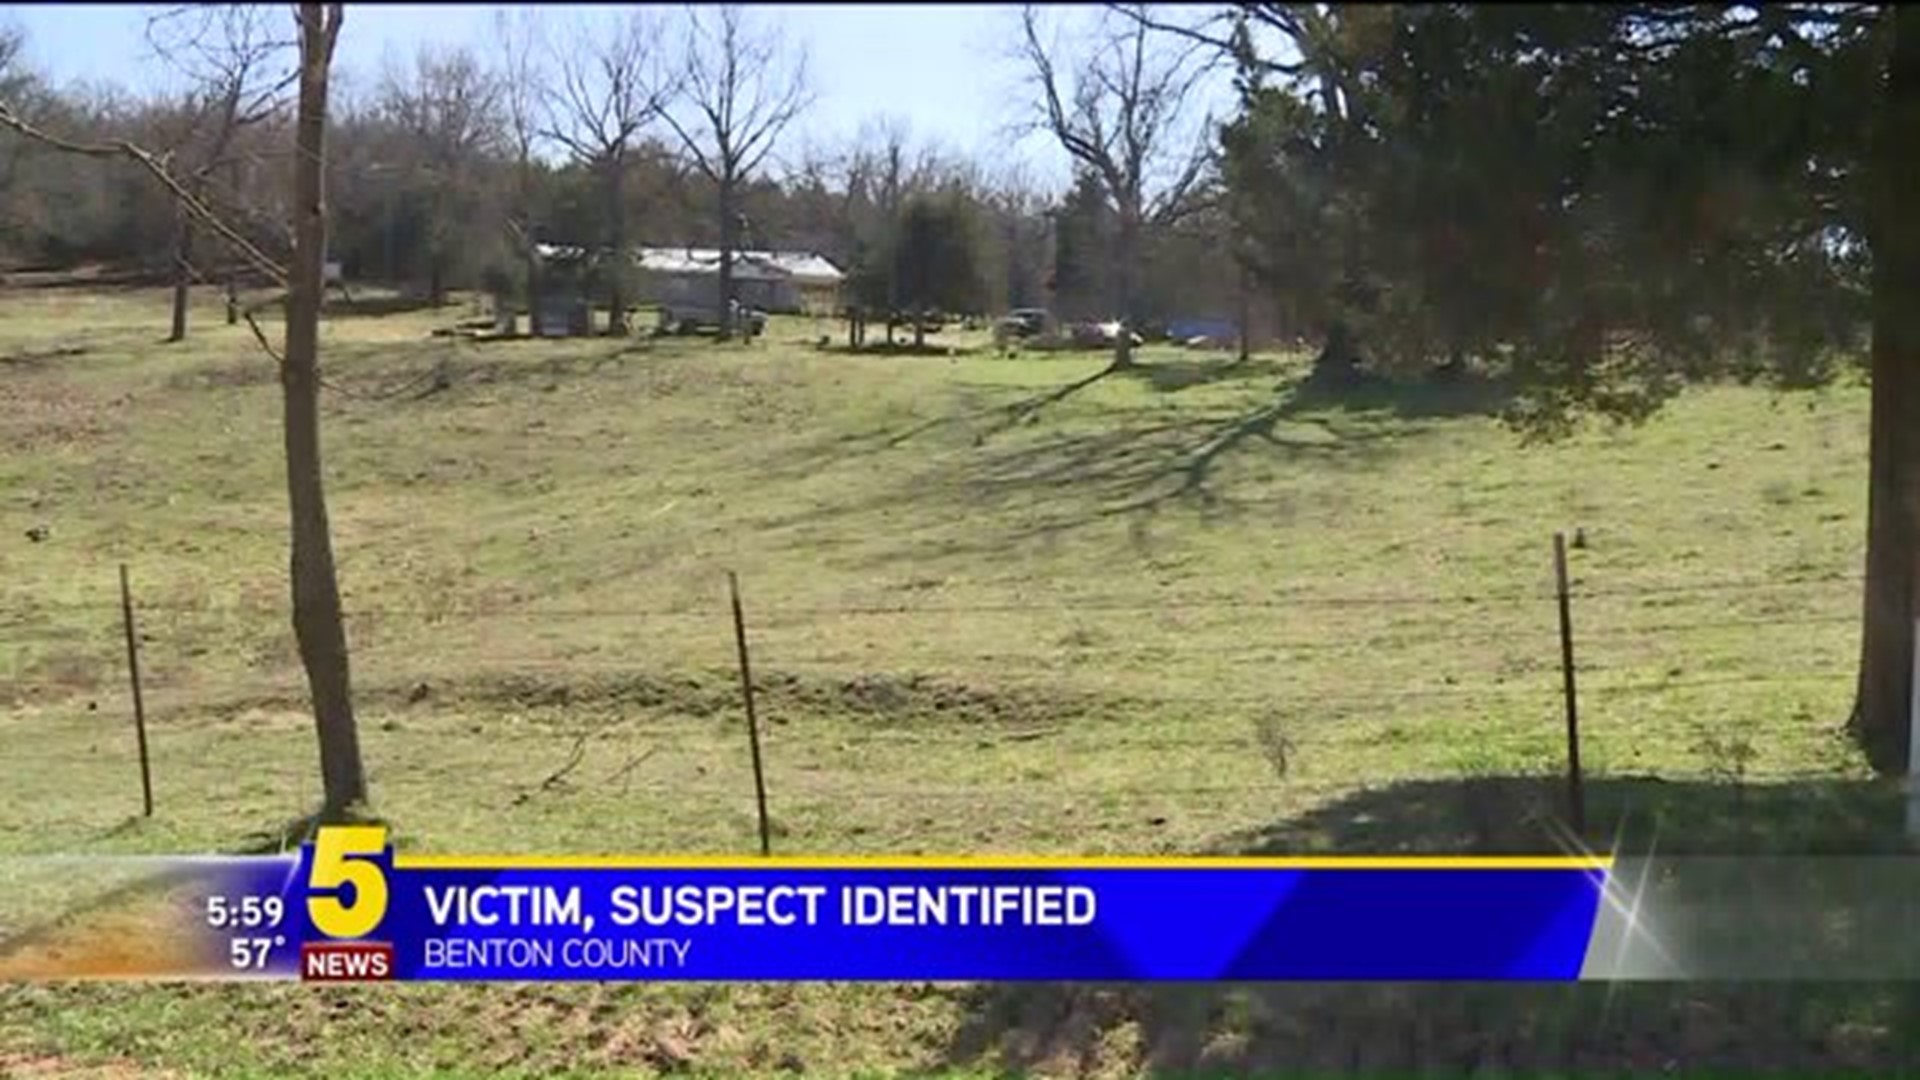 Benton County Victim, Suspect Identified